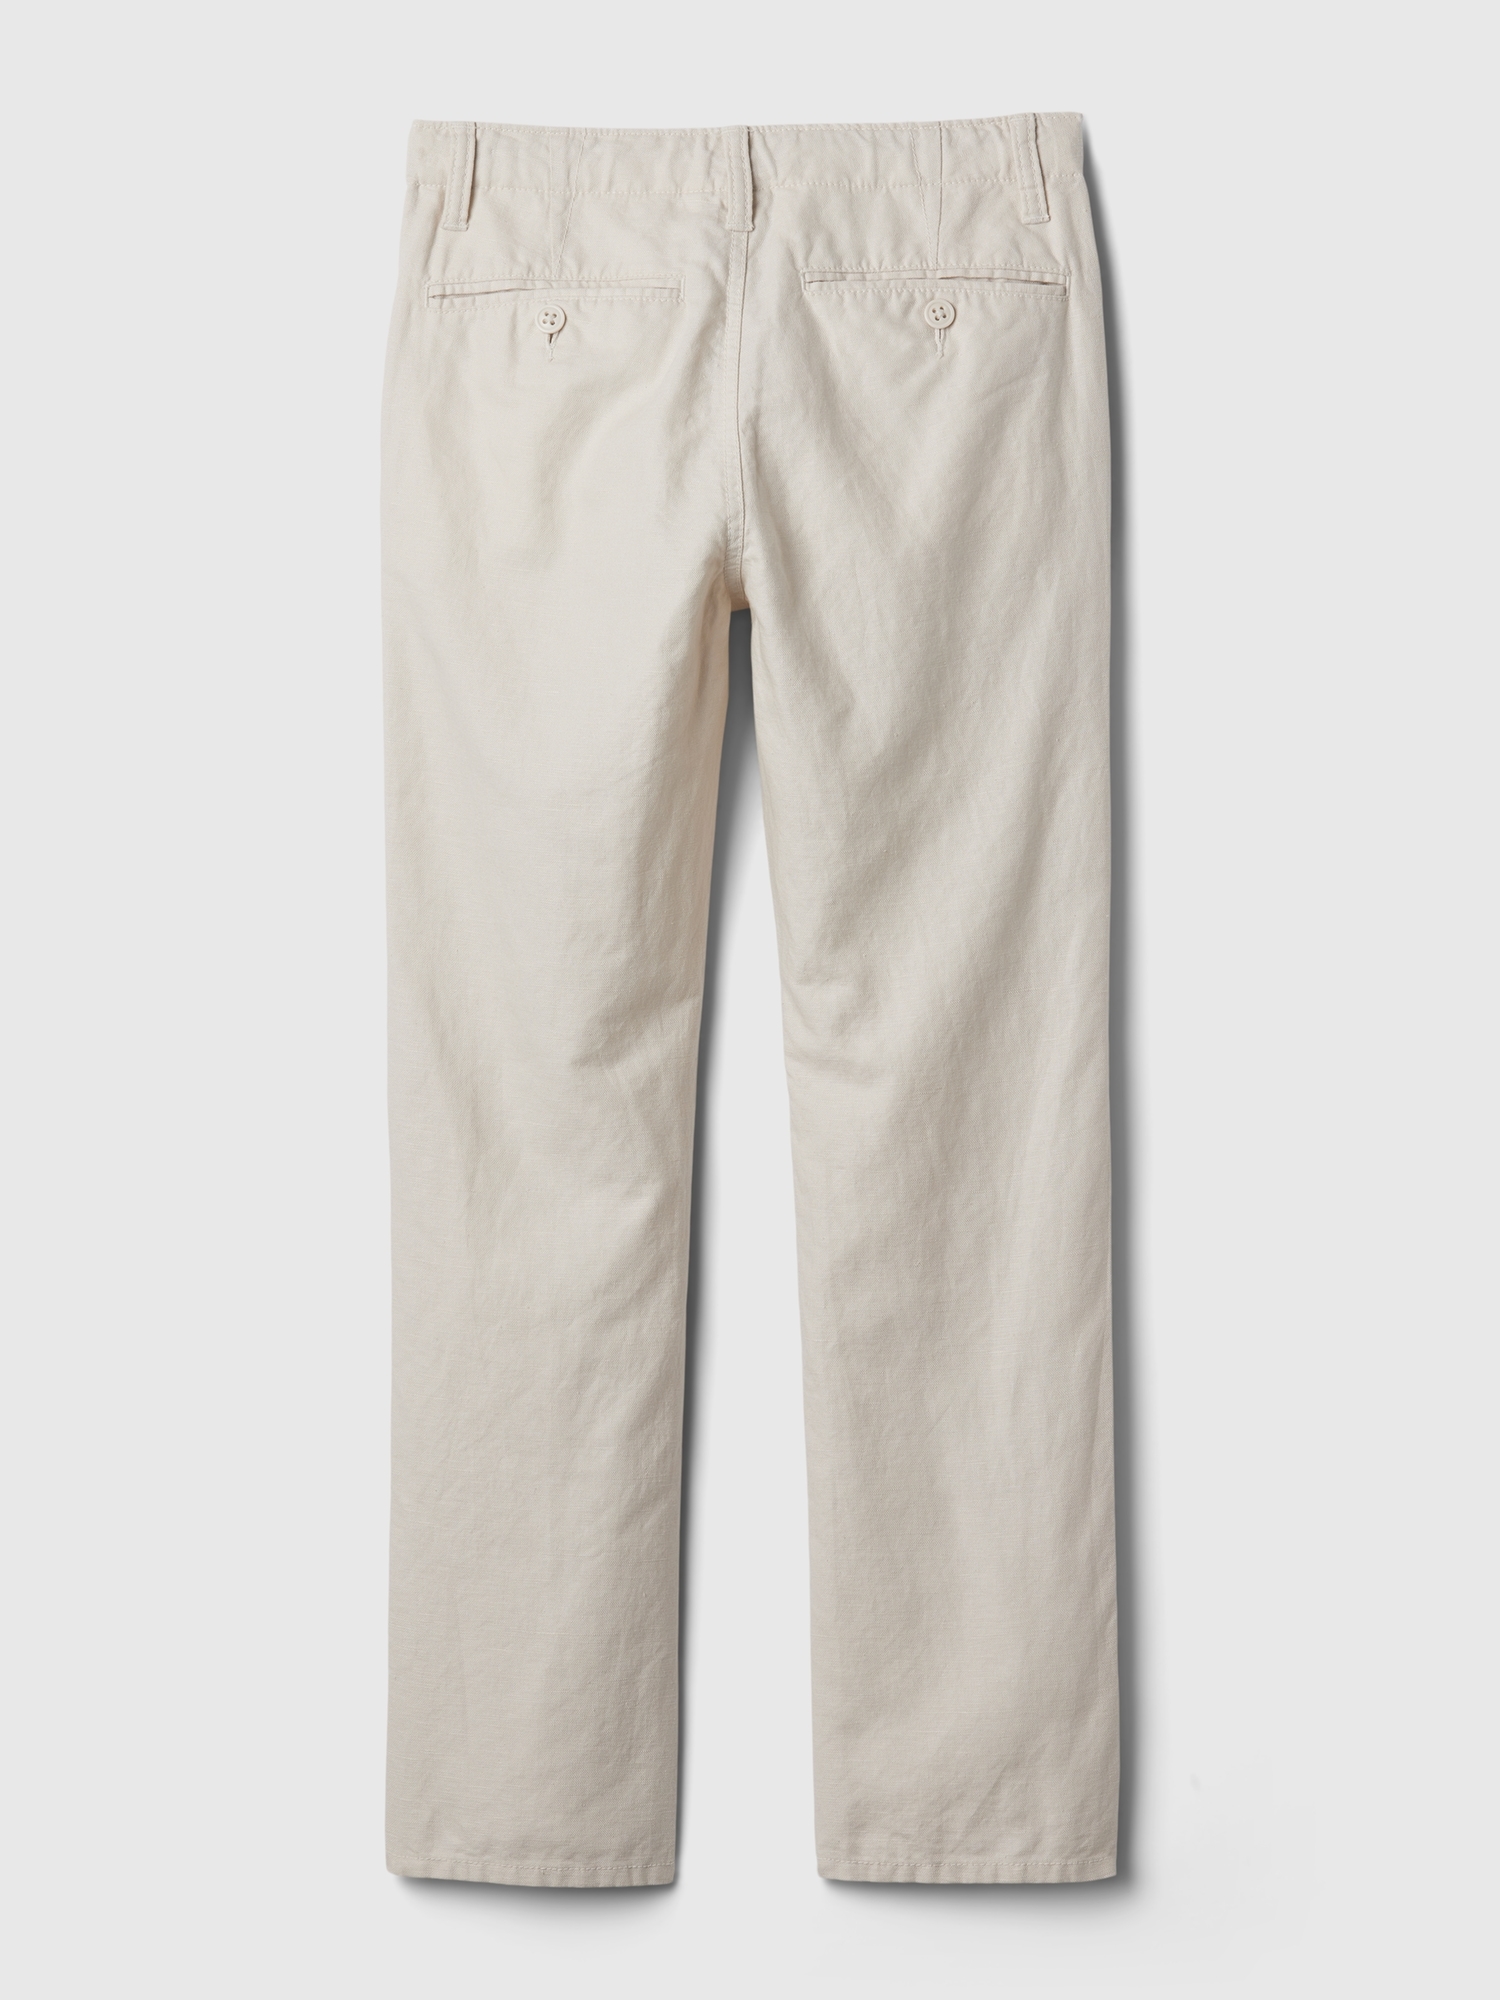 Vintage Khaki Shiny Cotton Simple Fitted Gymnastics Underwear